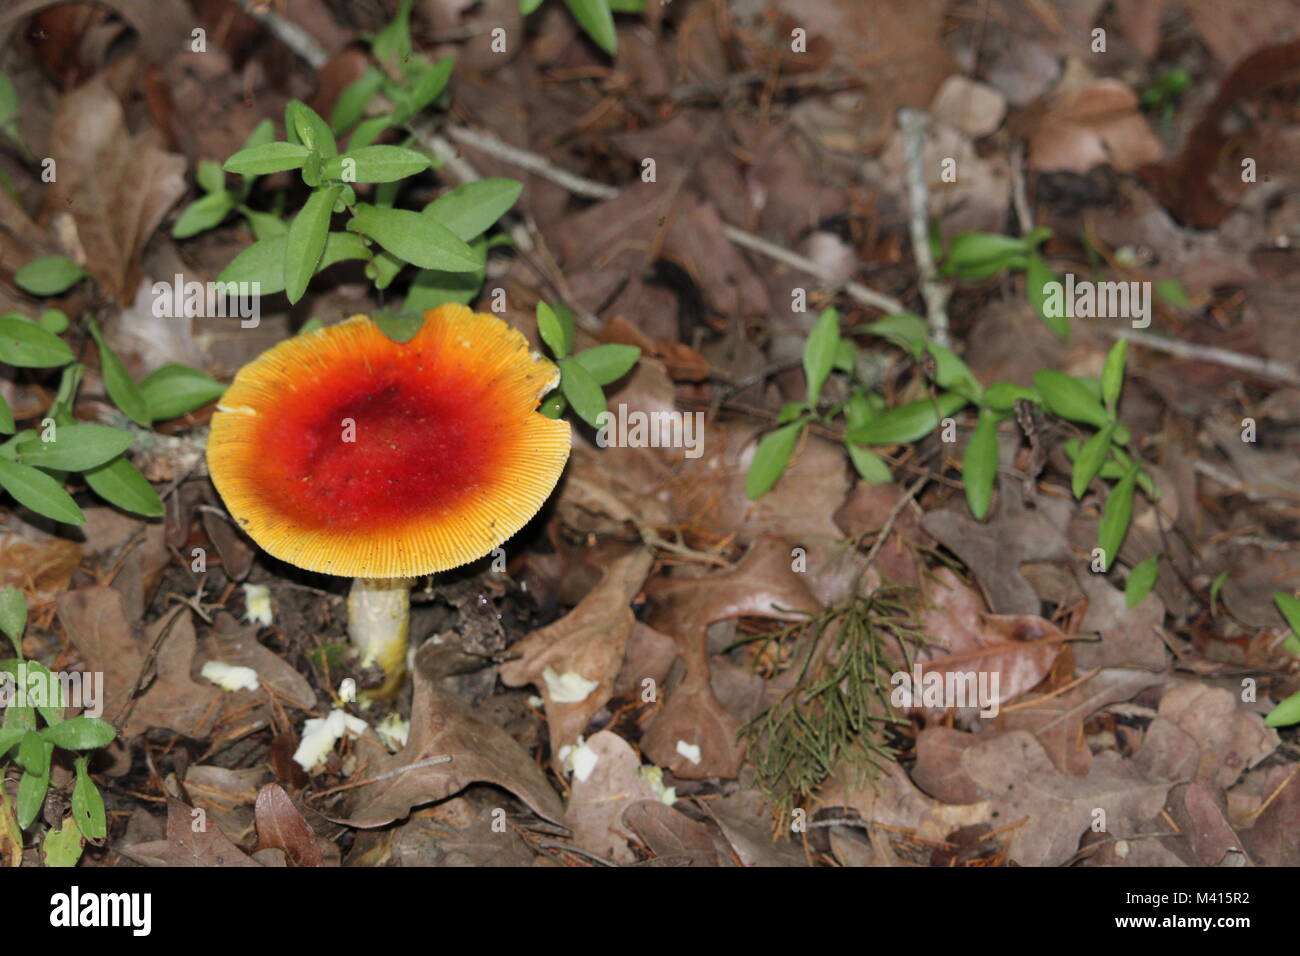 North American Amanita Jacksonii mushroom is a version of the European Amanita Ceasarea mushroom. Stock Photo